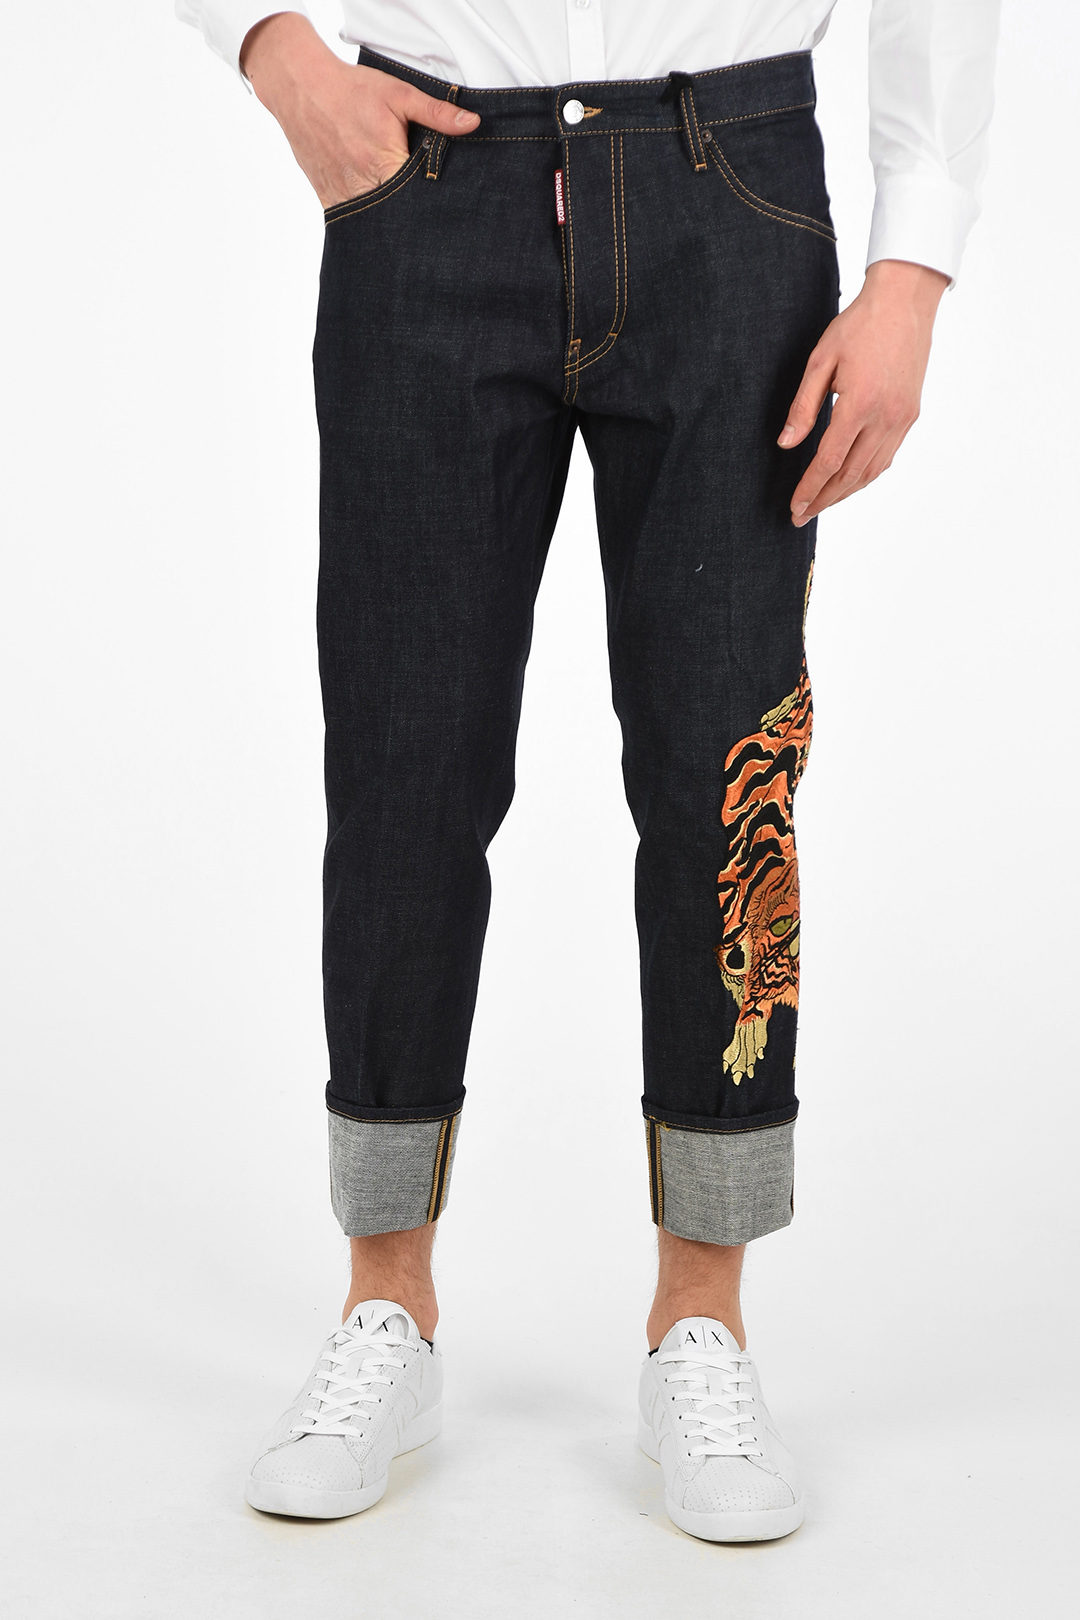 solo Sjov brænde Dsquared2 19cm Tiger-Embroidery Low-Waist RUN DAN Cropped Jeans men -  Glamood Outlet